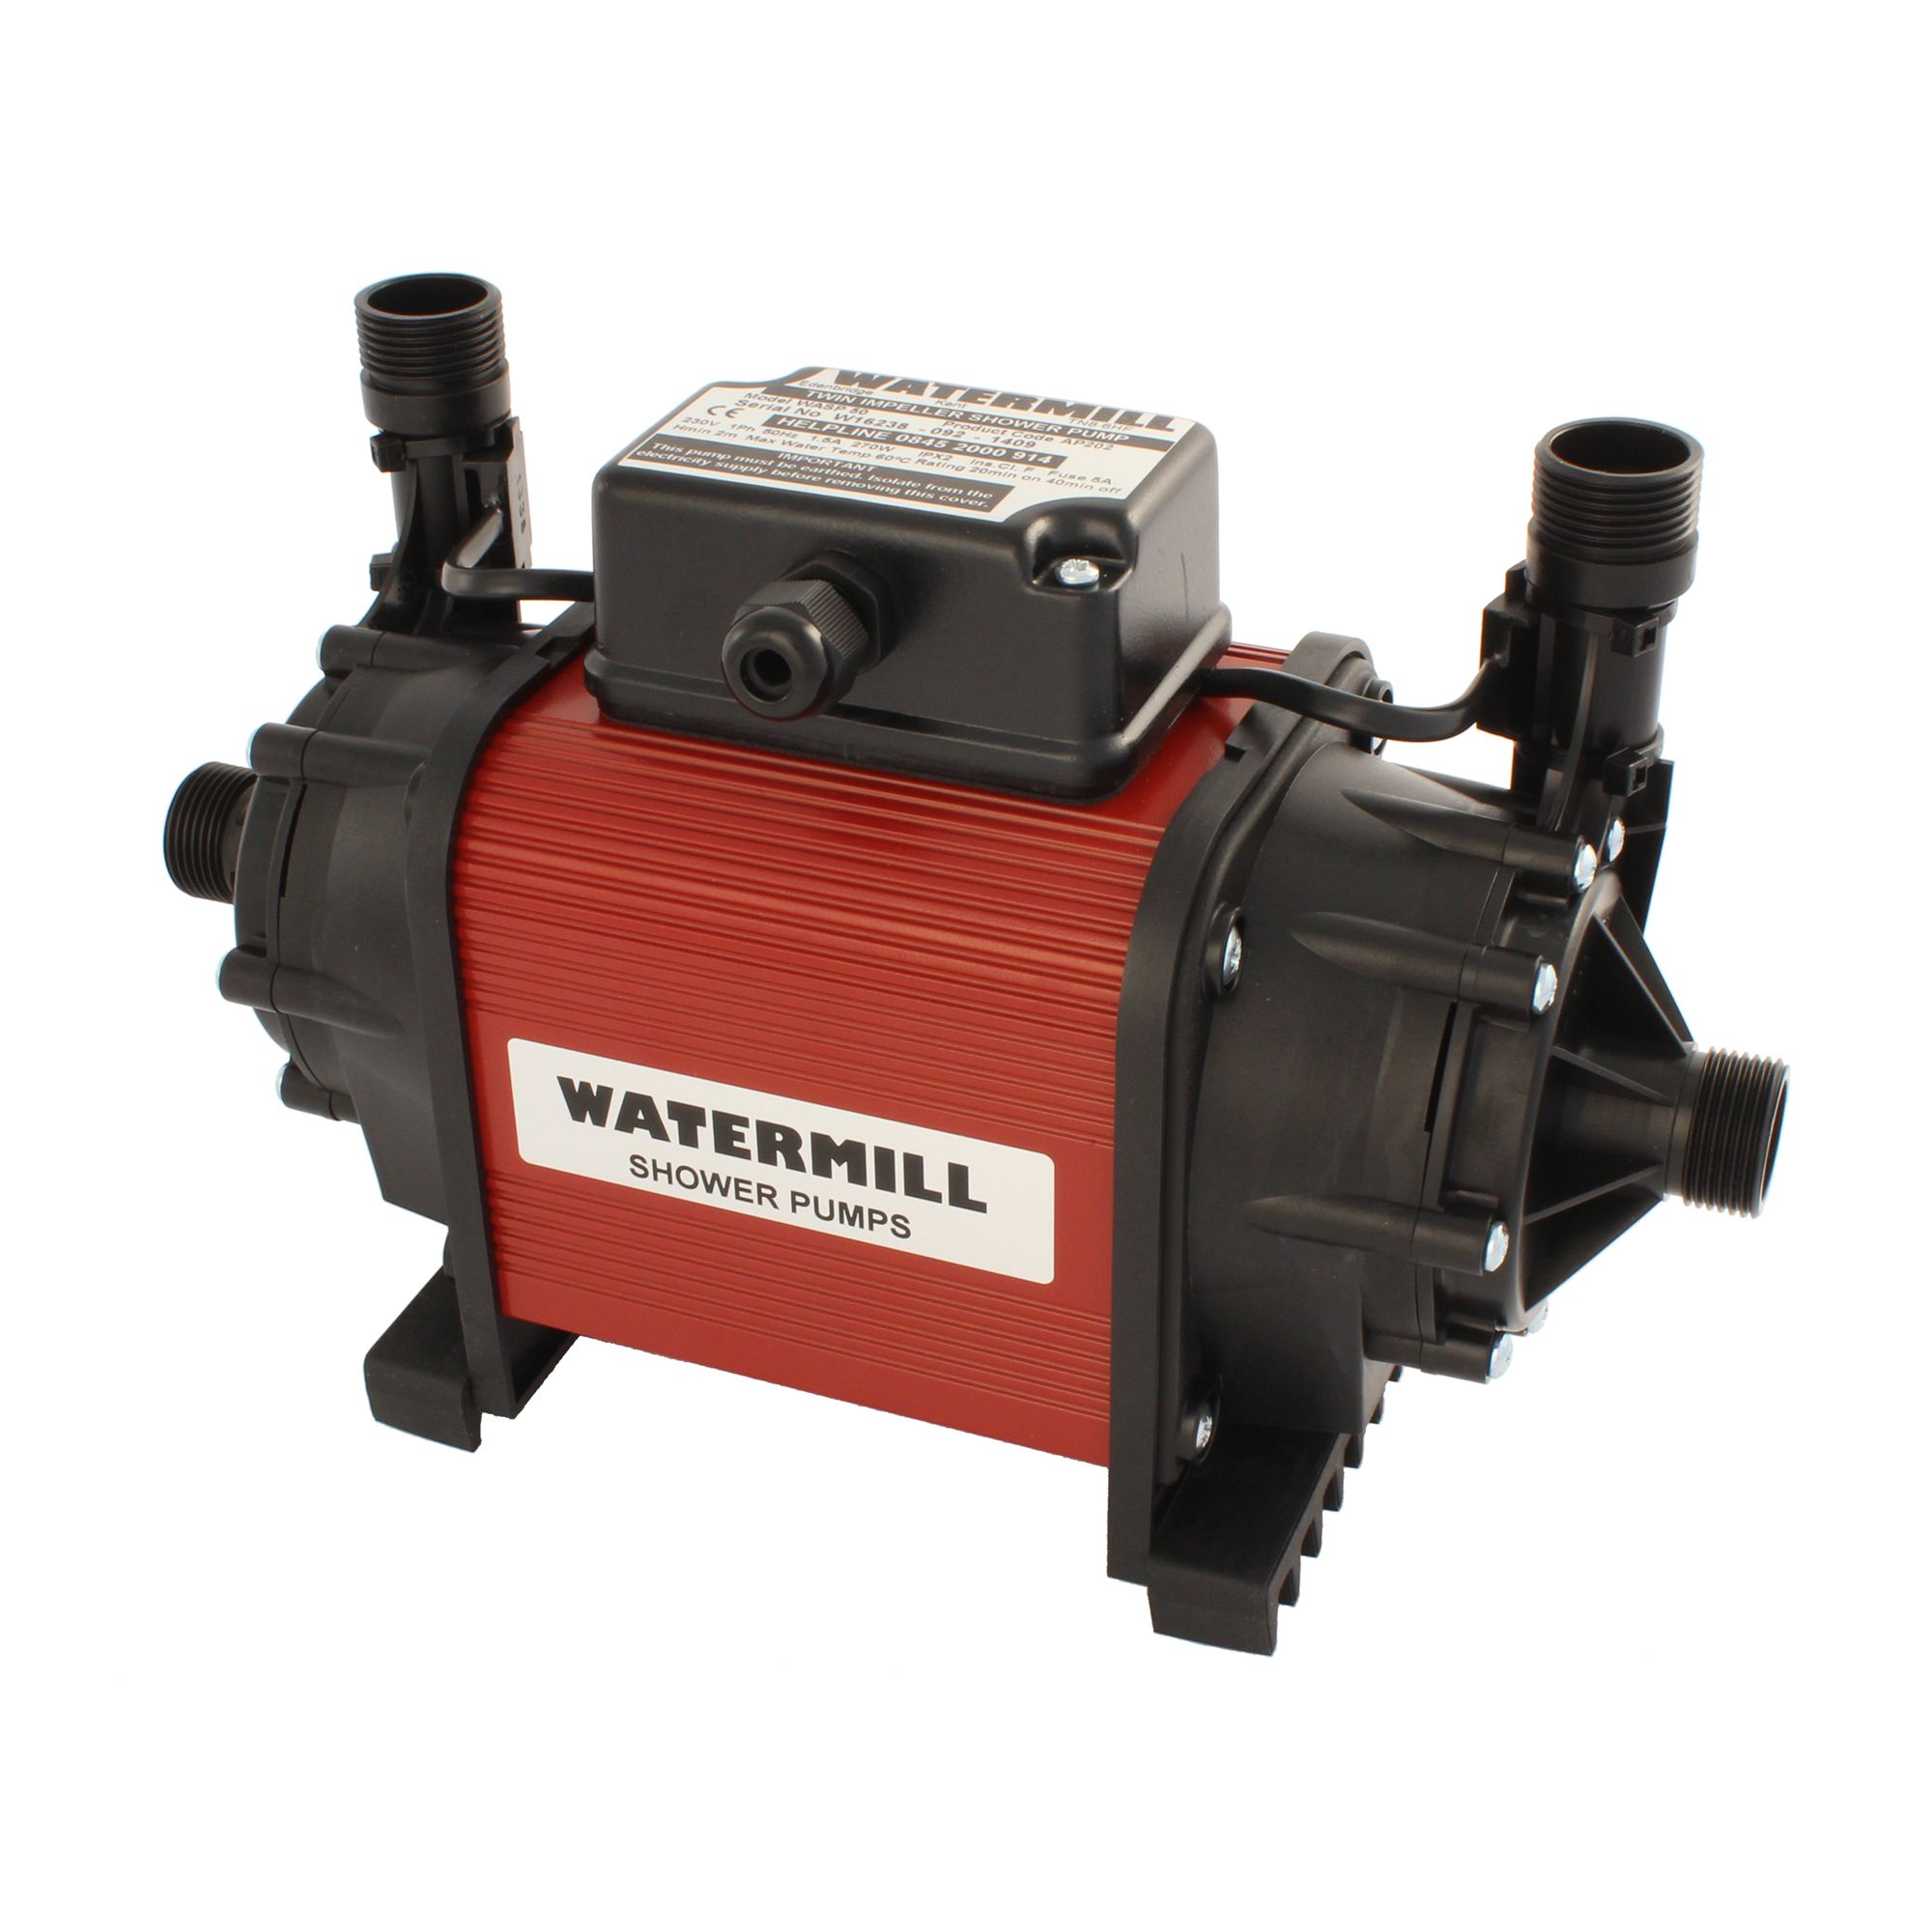 Watermill 1.5 bar Shower pump (W)220mm at B&Q